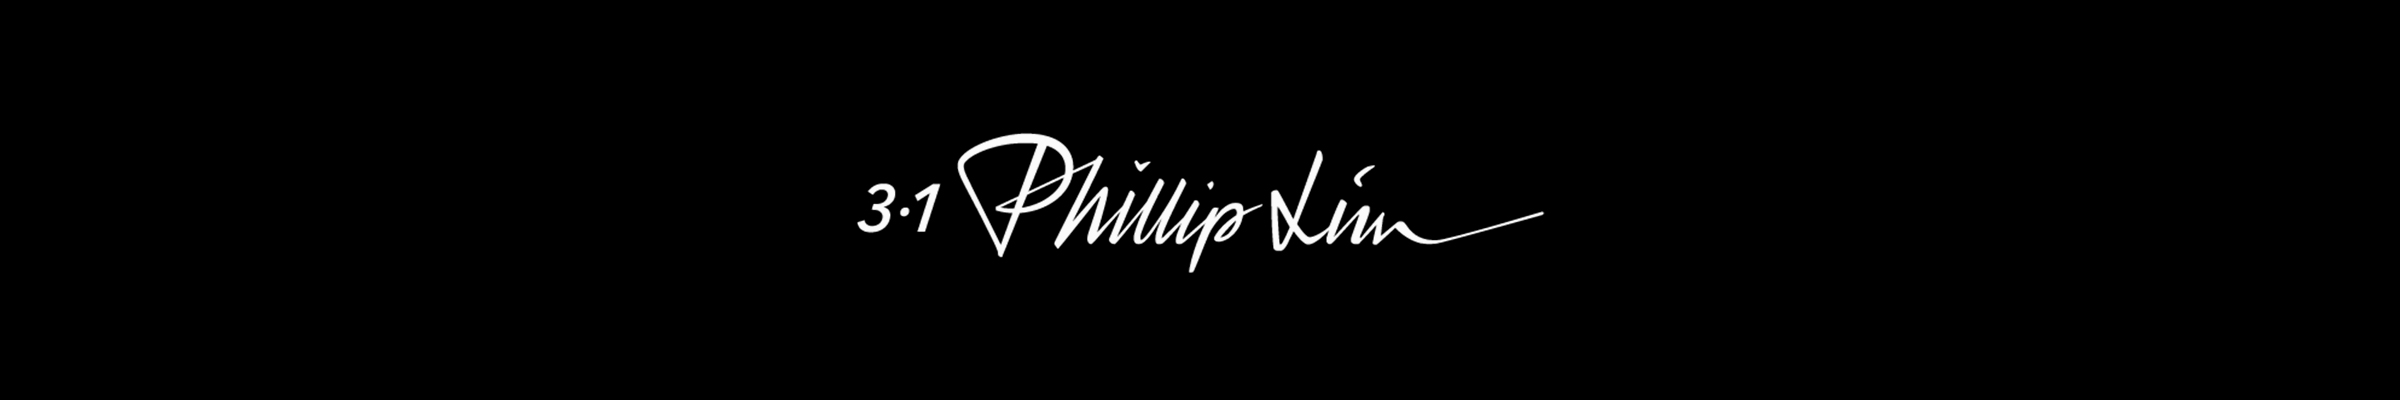 3.1-philiplim-banner